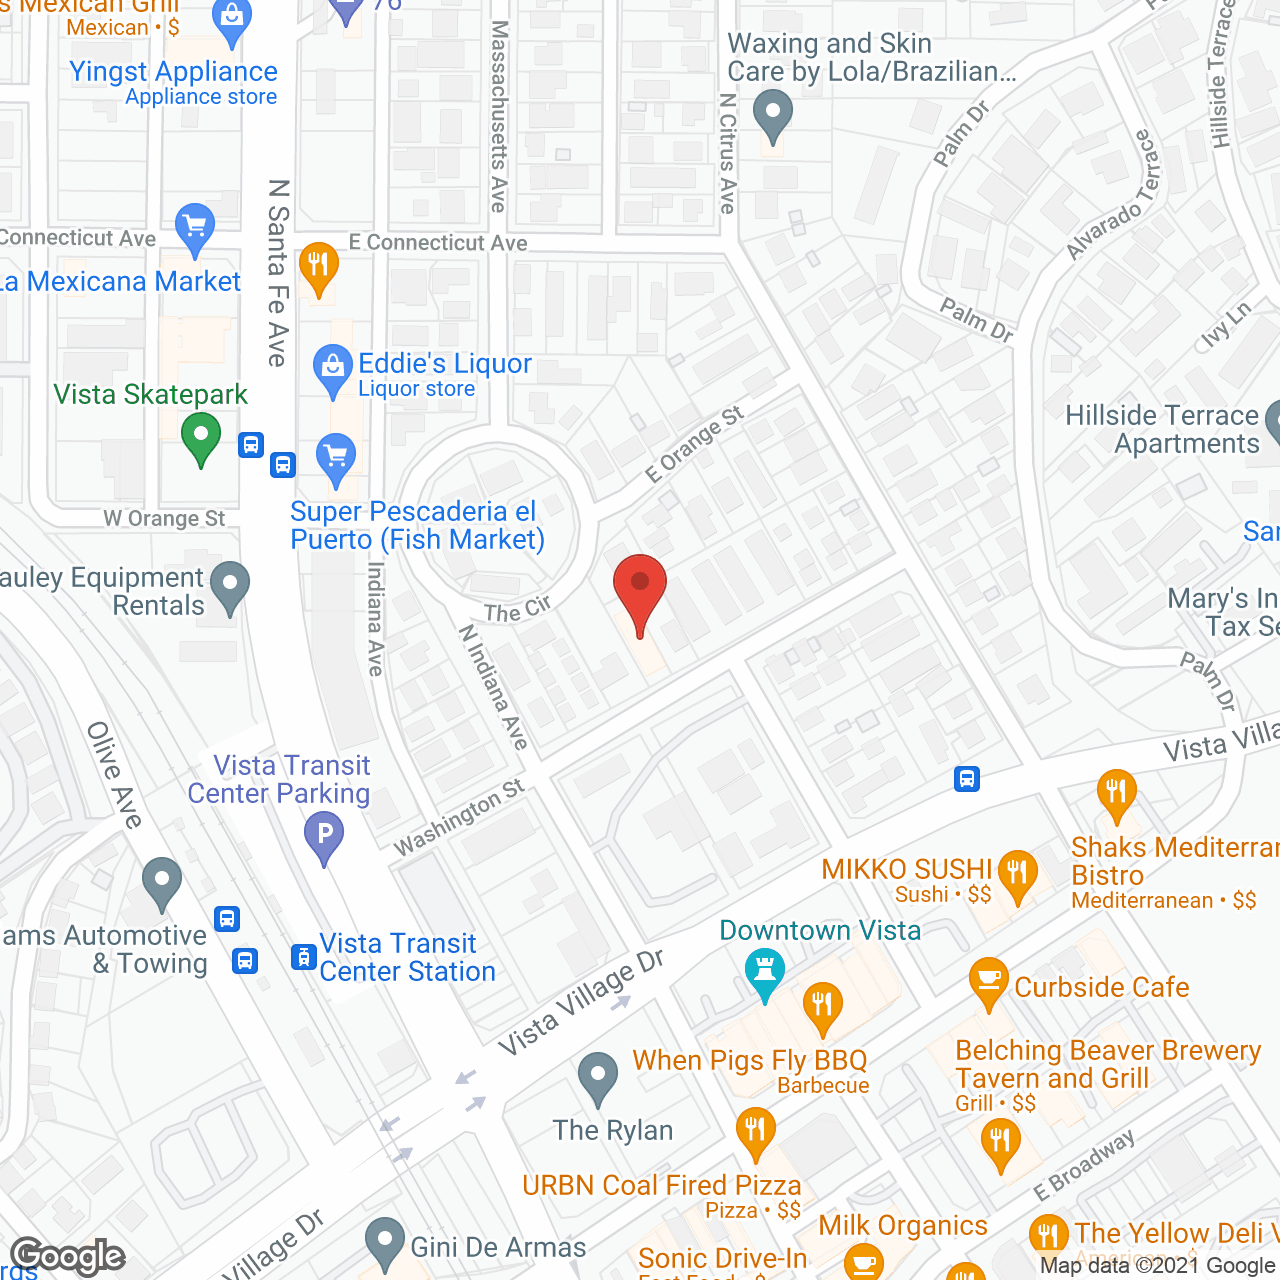 Vista Village Care in google map